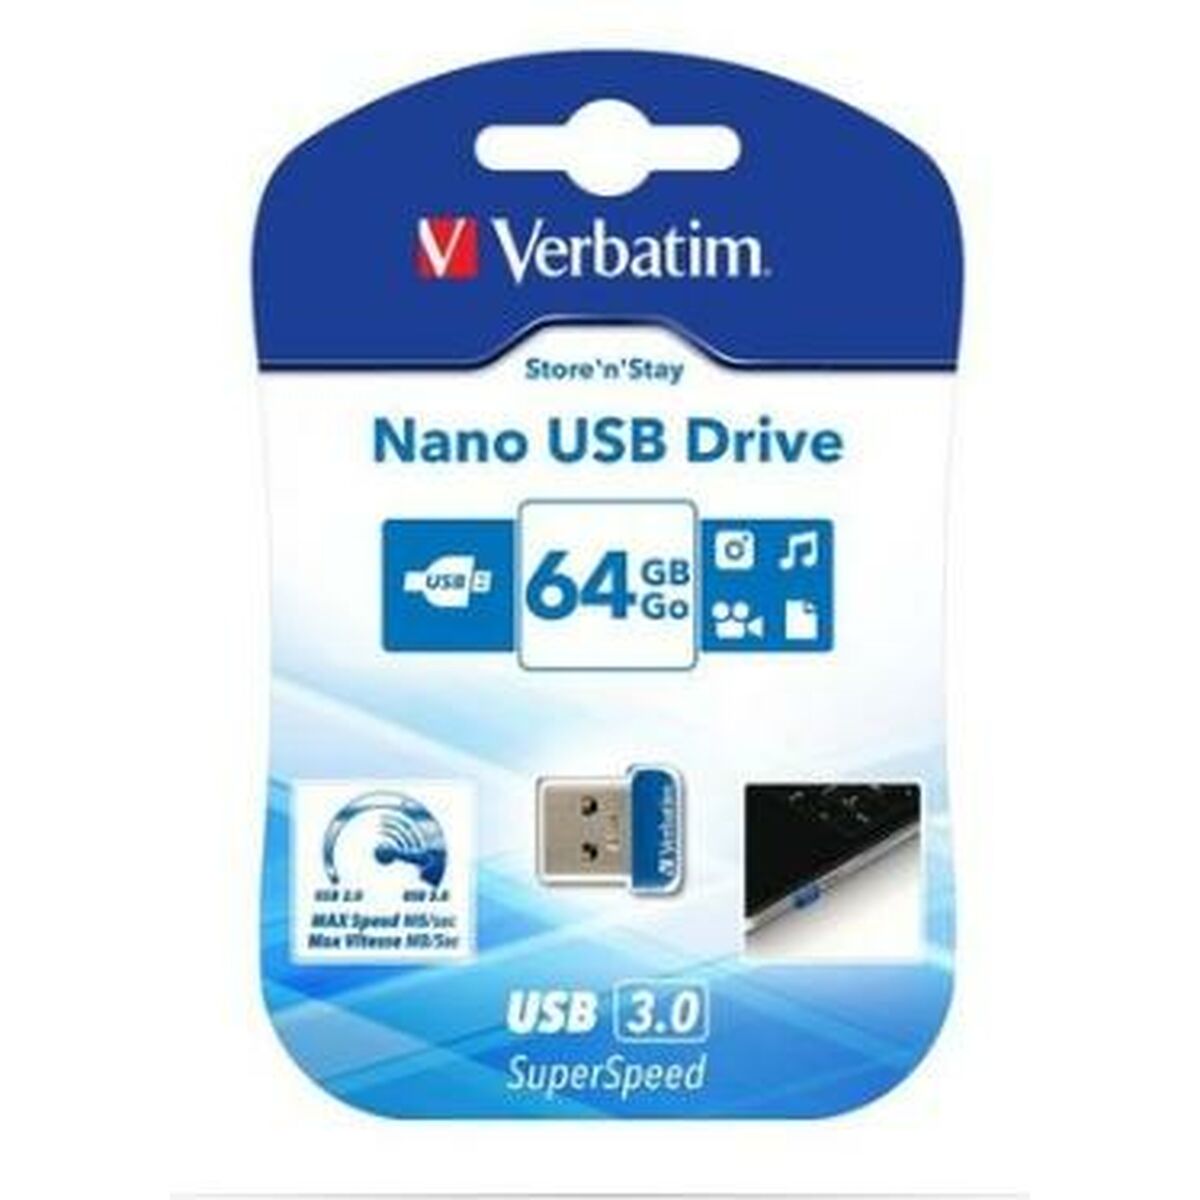 Memorie USB Verbatim Store 'n' Stay NANO Negru Albastru 64 GB